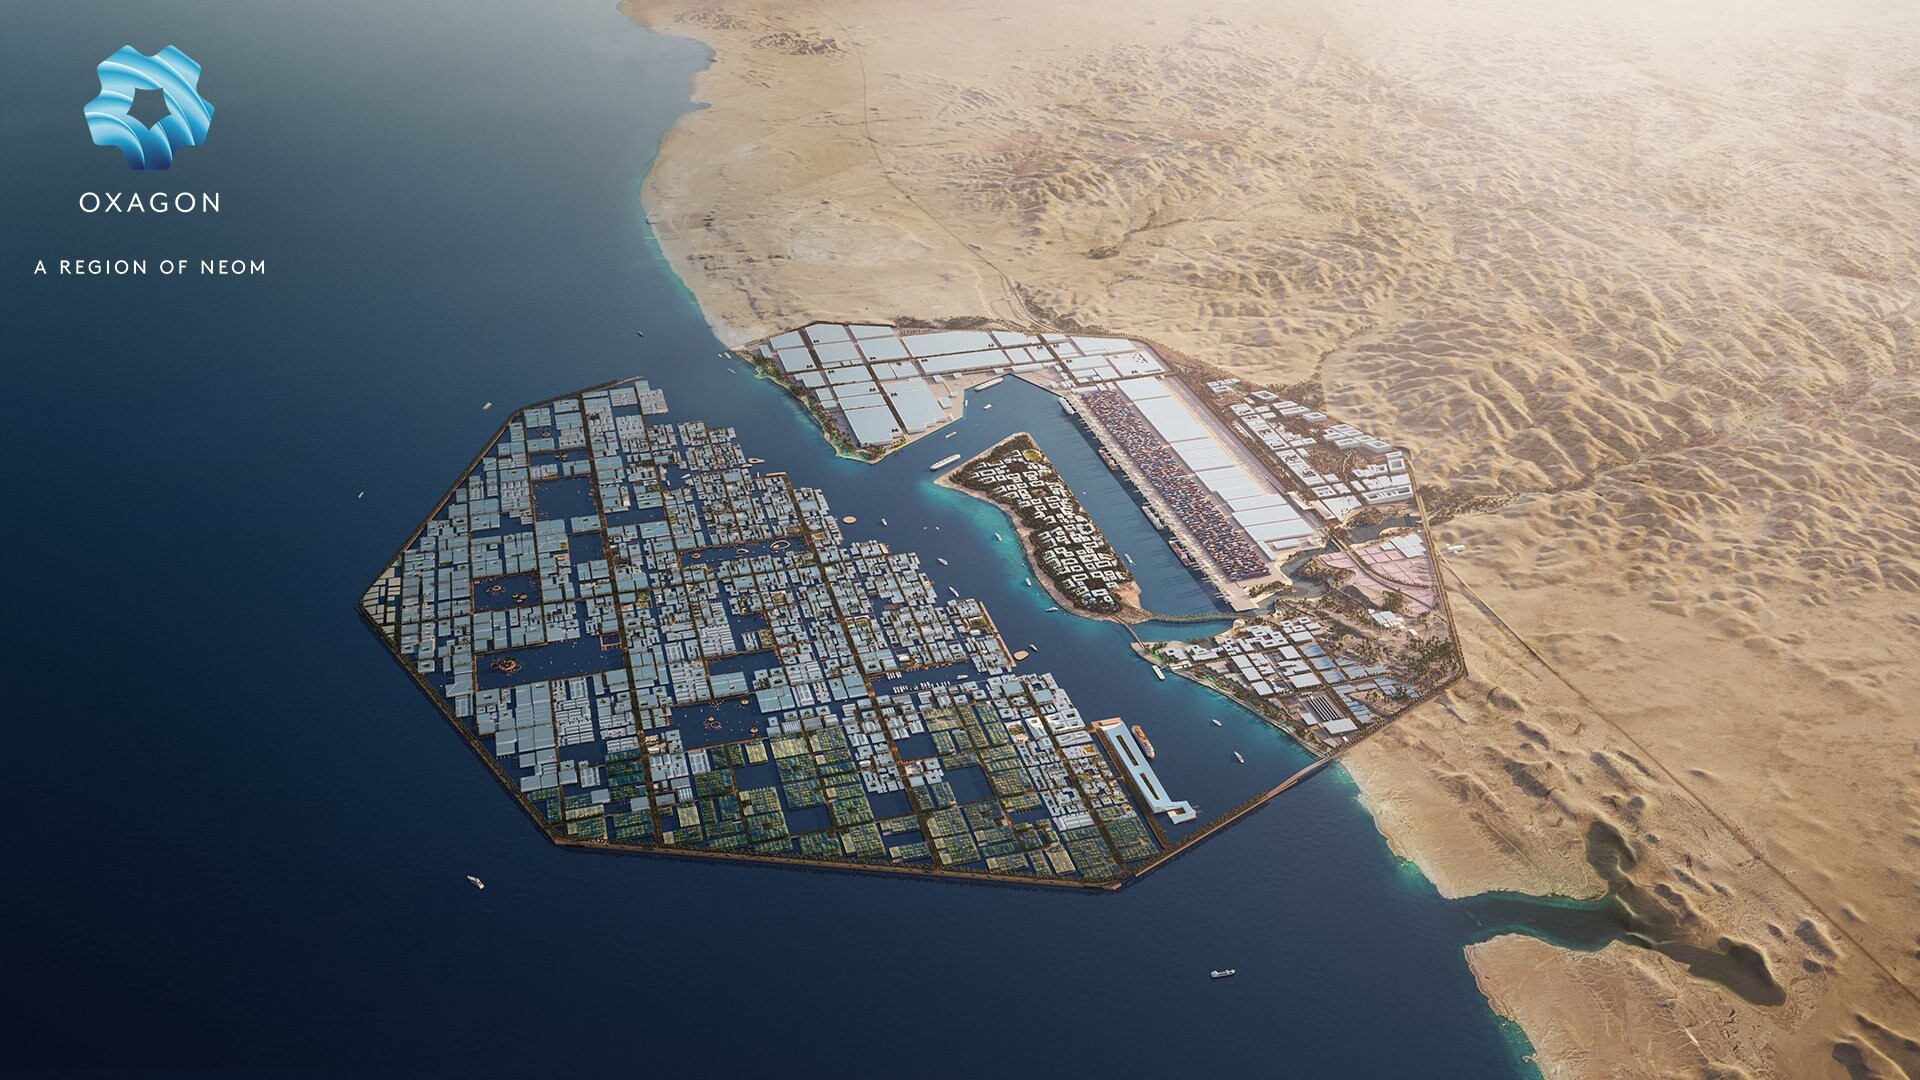 More information about "Oxagon: Η οκτάγωνη πλωτή πόλη που θα επιπλέει στην Ερυθρά Θάλασσα"